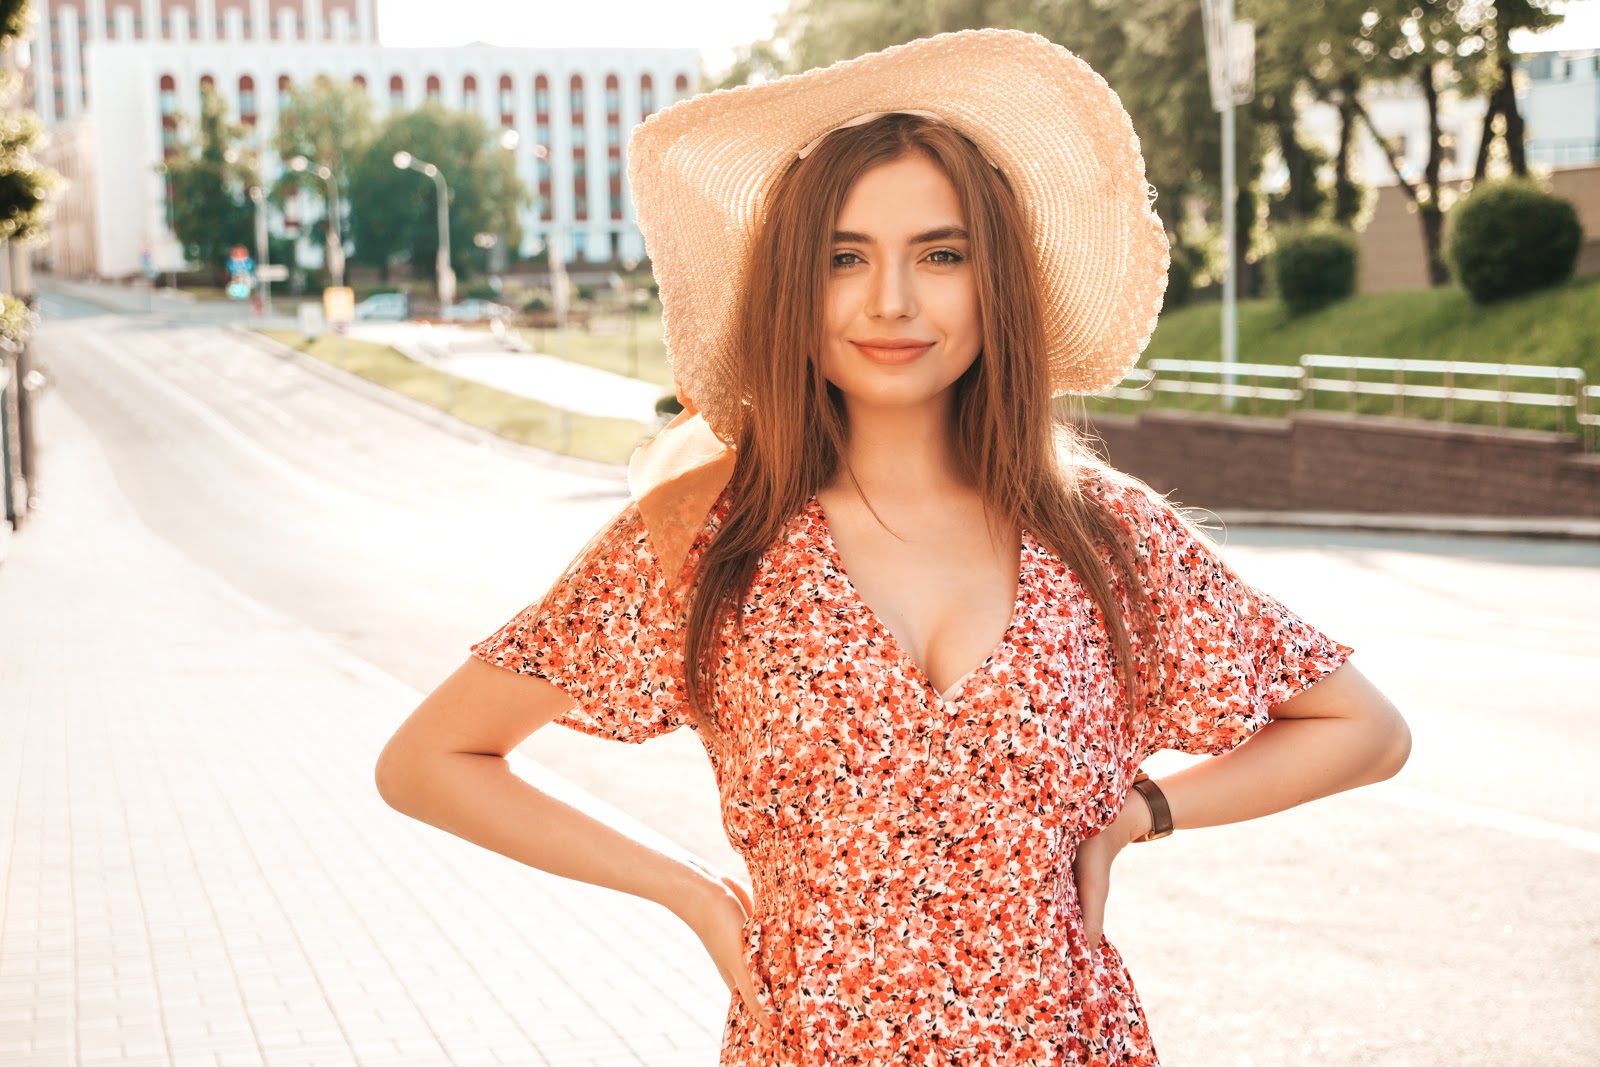 Ukrainian young beautiful smiling hipster girl